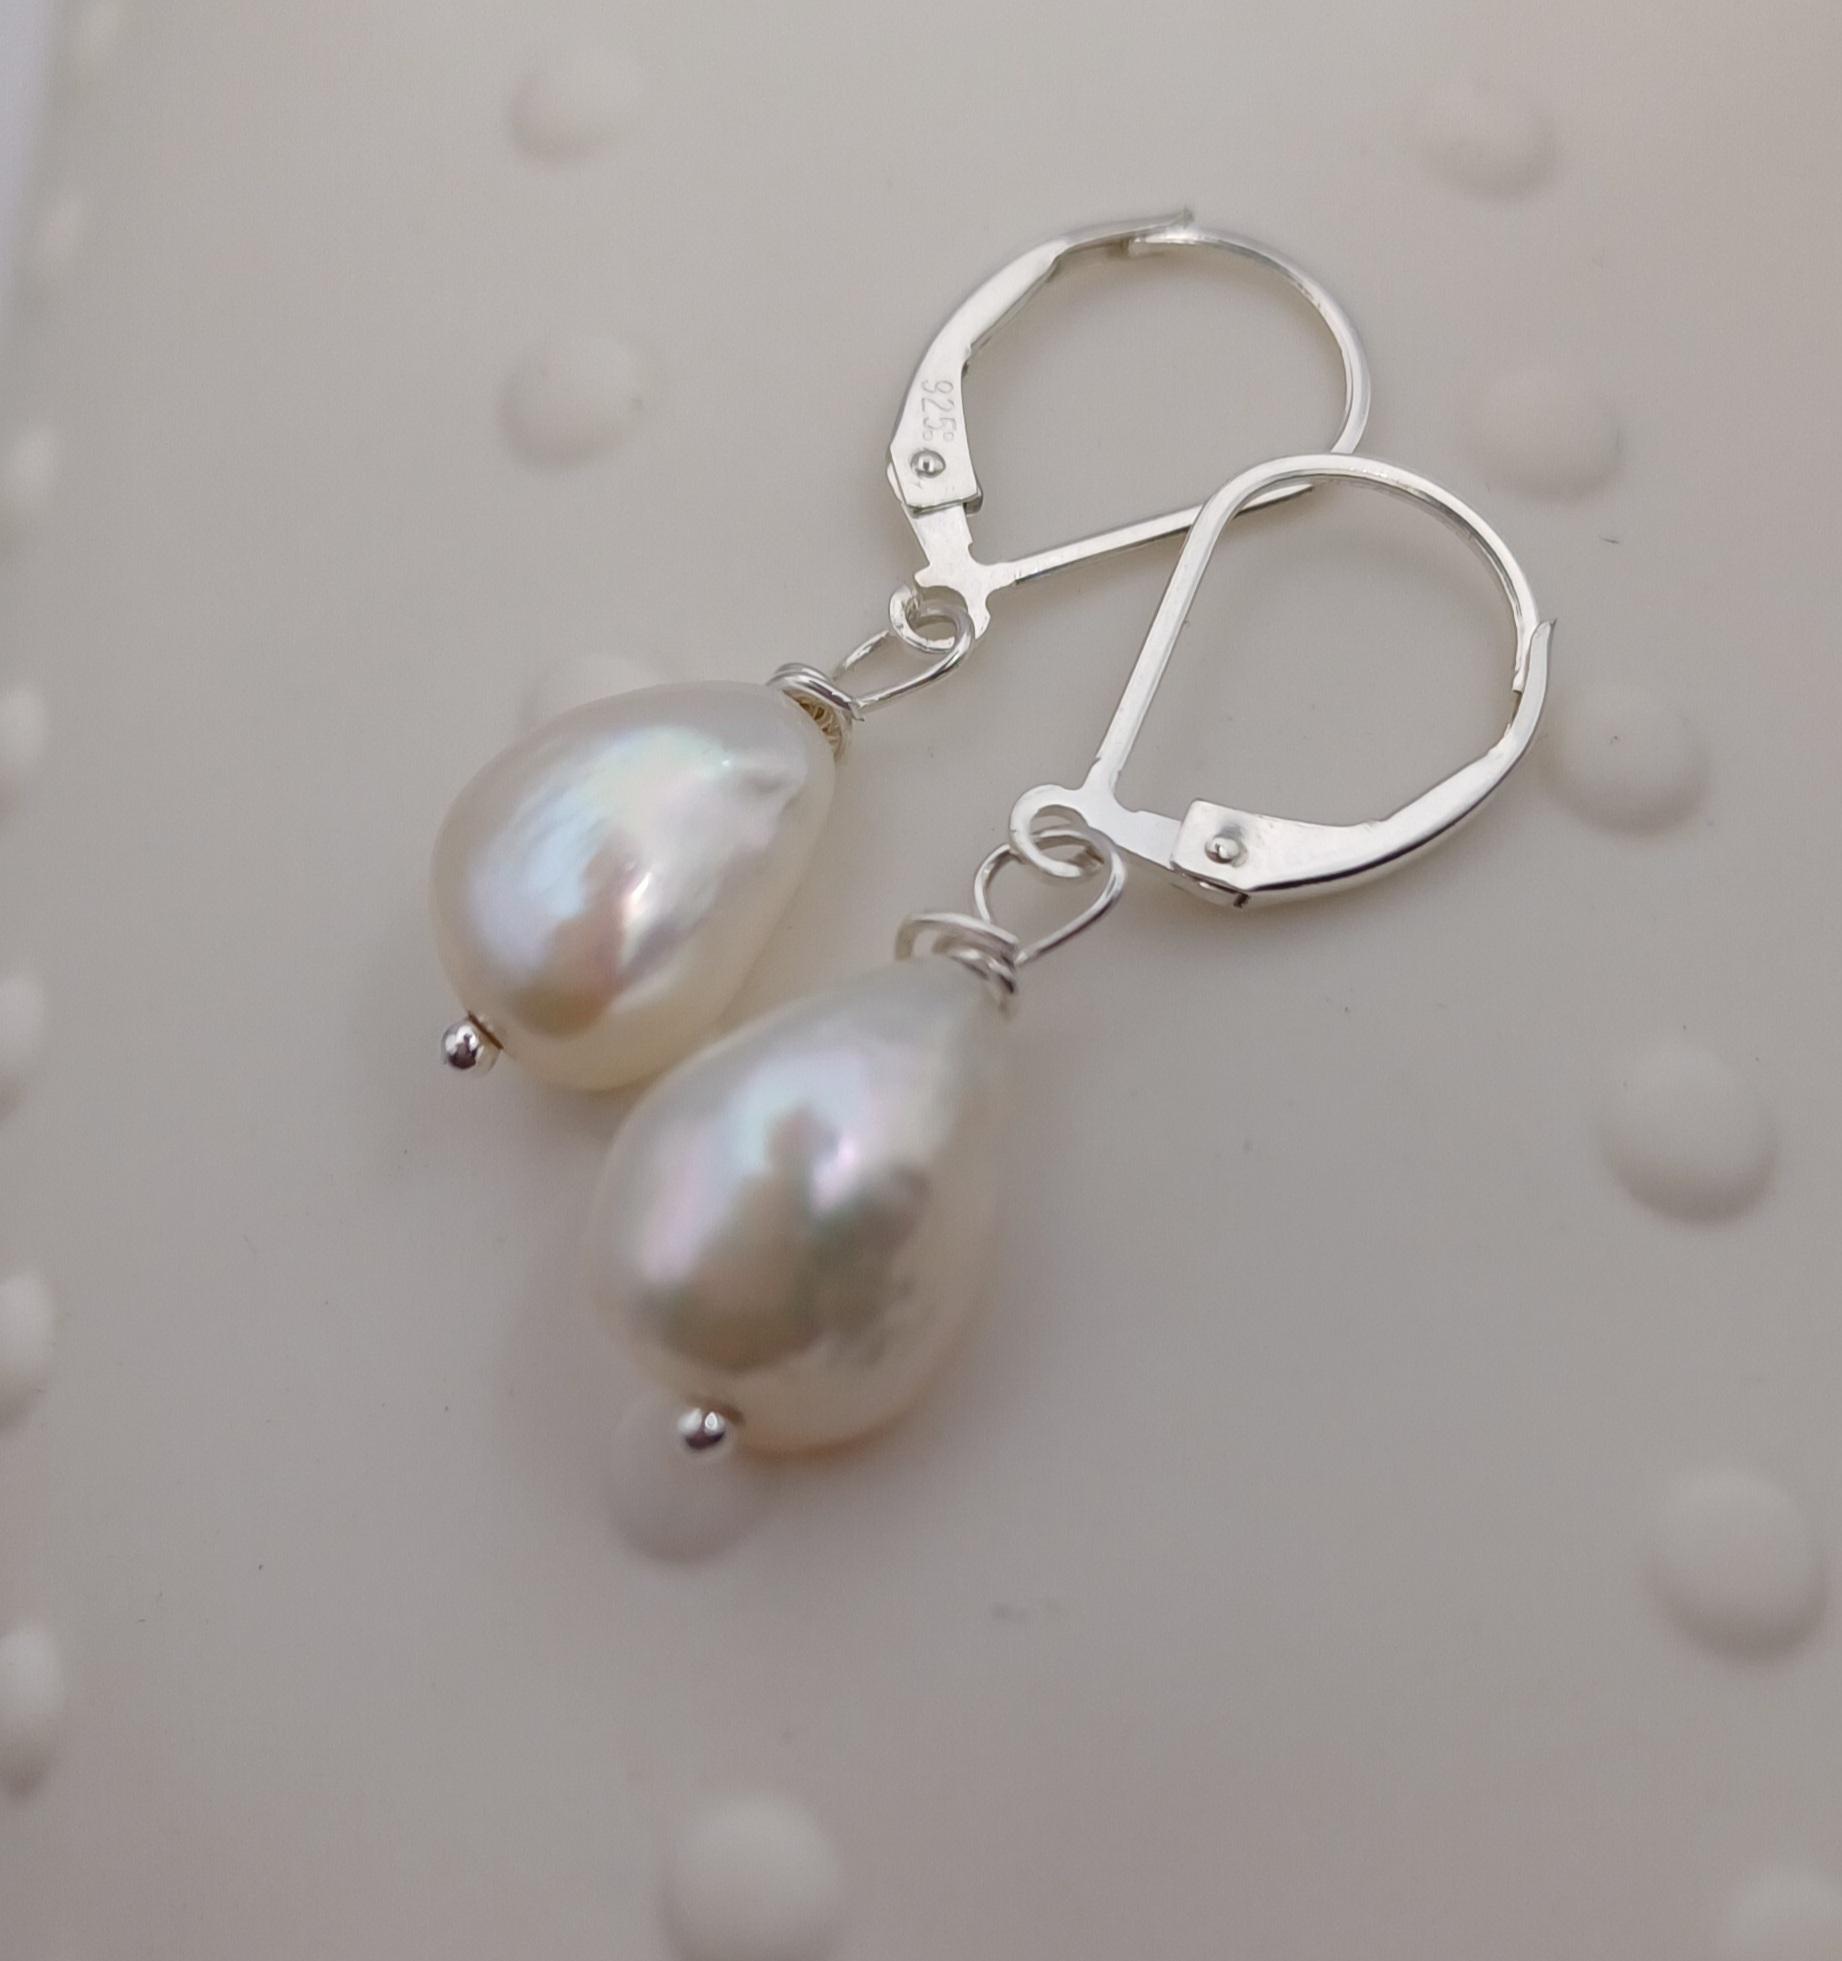 EARRINGS - Sterling Silver White Pearl Earrings